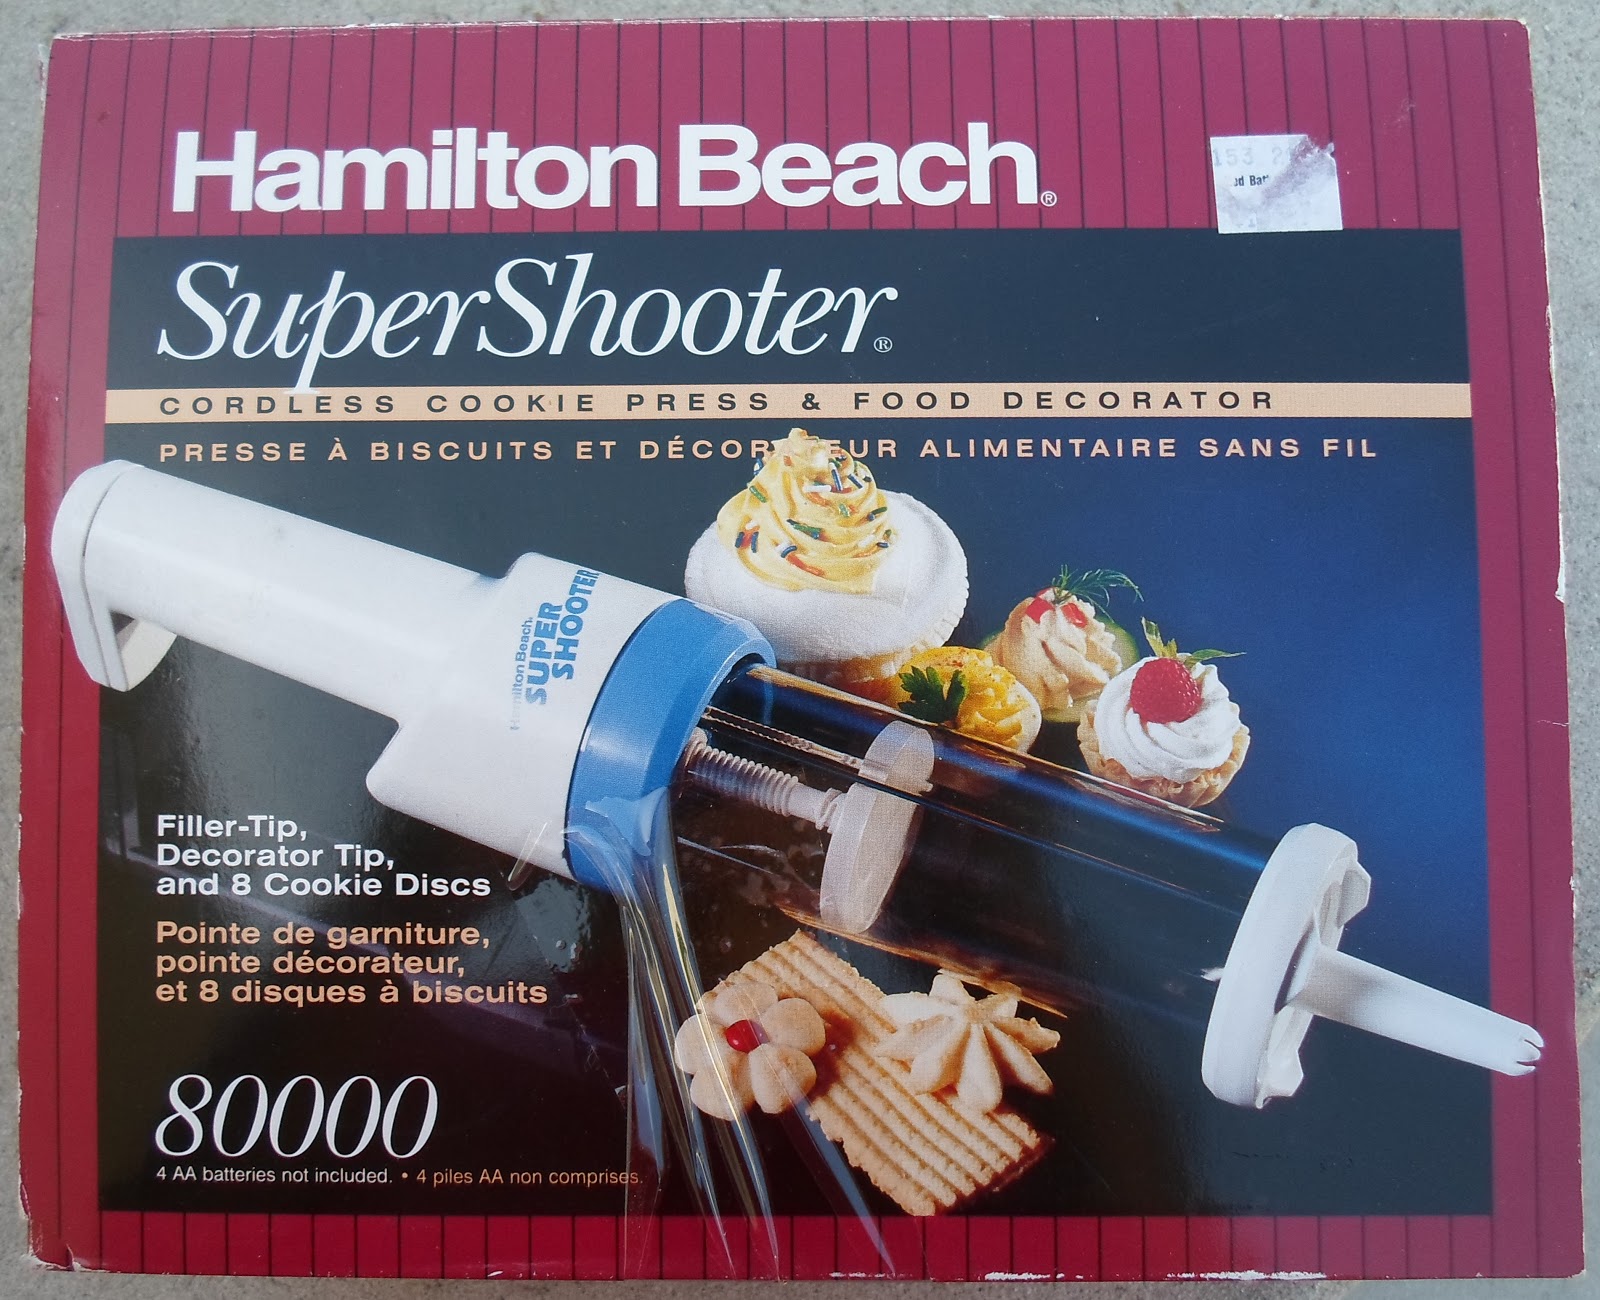 Hamilton Beach The Super Shooter Cordless Cookie Press & Decorator Complete